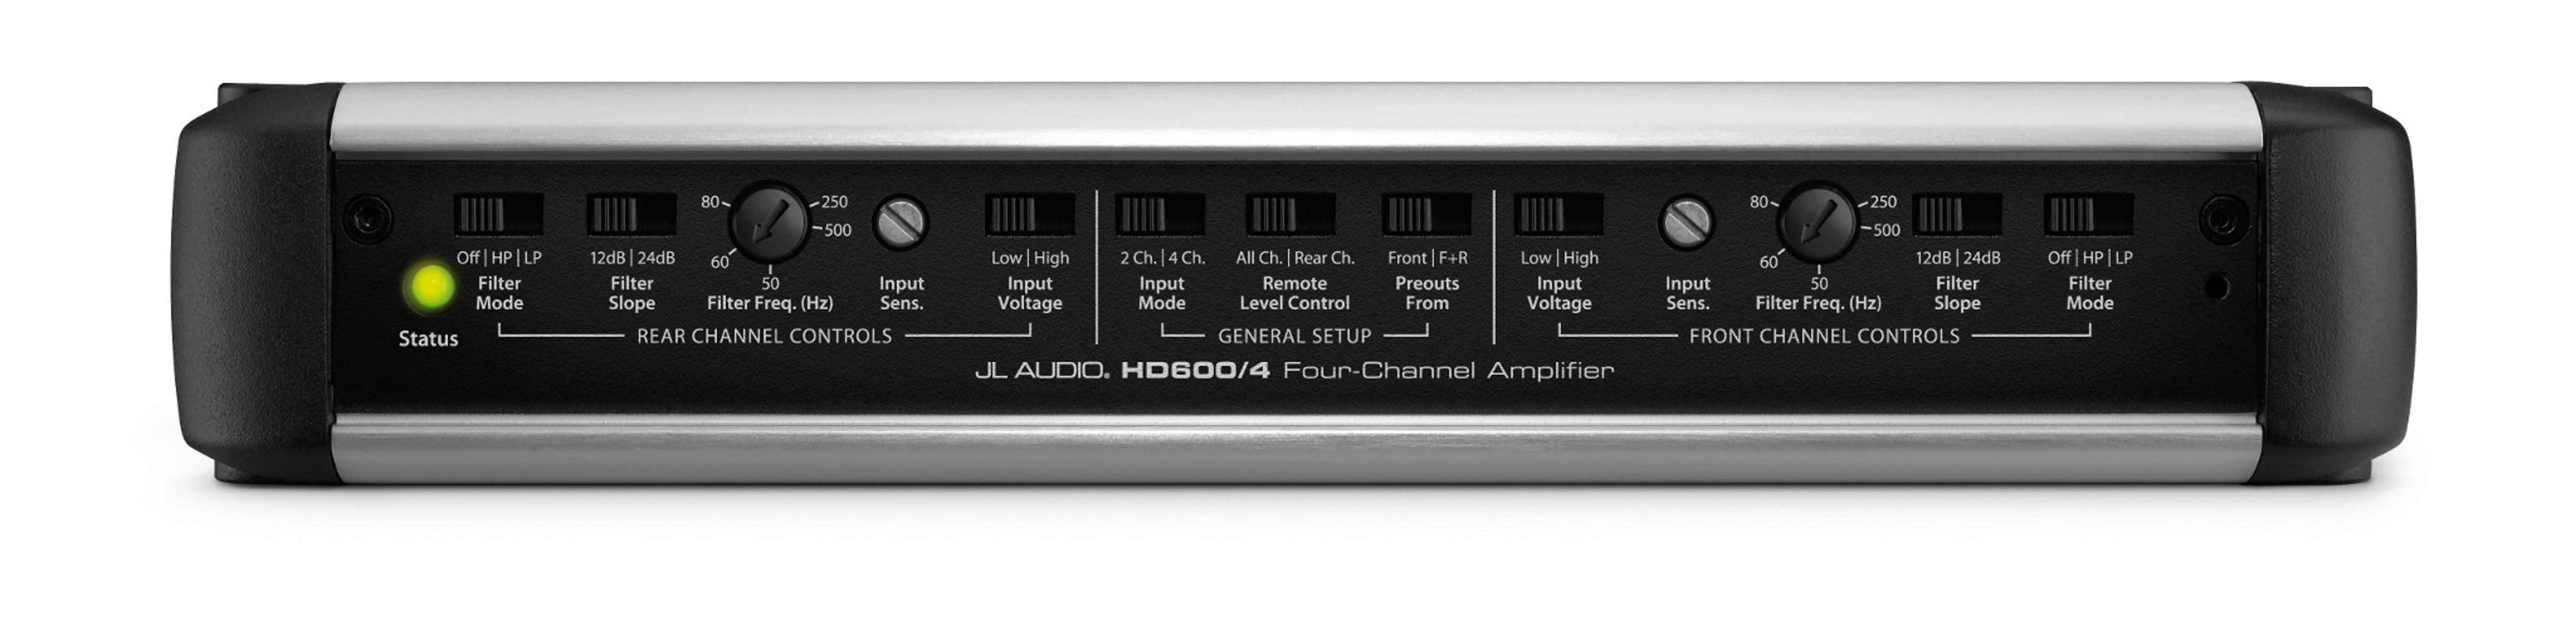 HD600/4 - Car Audio - Amplifiers - HD - JL Audio